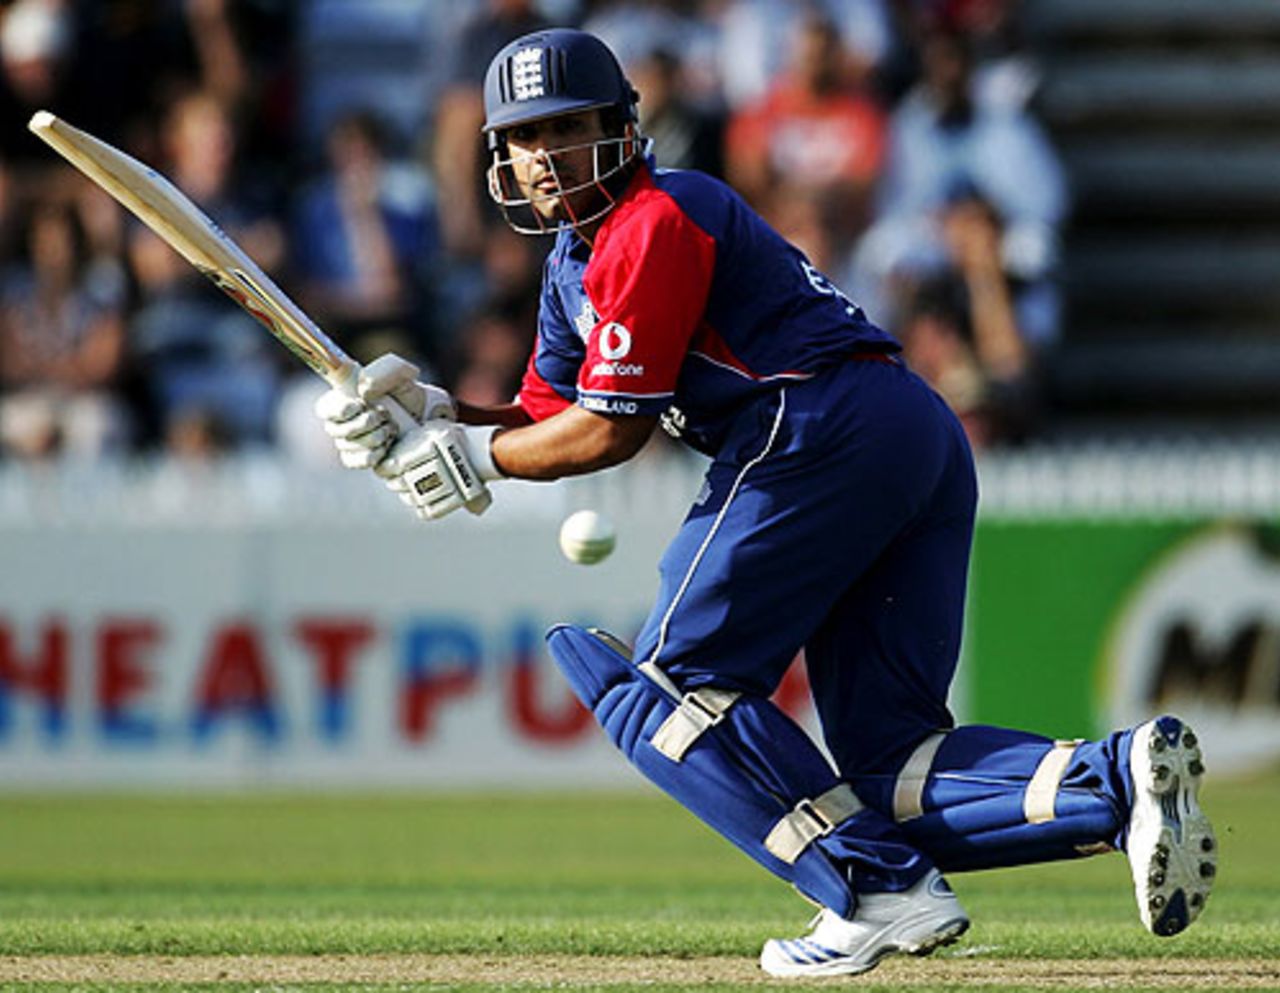 Ravi Bopara flicks through leg during his innings of 23, New Zealand v England, 2nd ODI, Hamilton, February 12, 2008